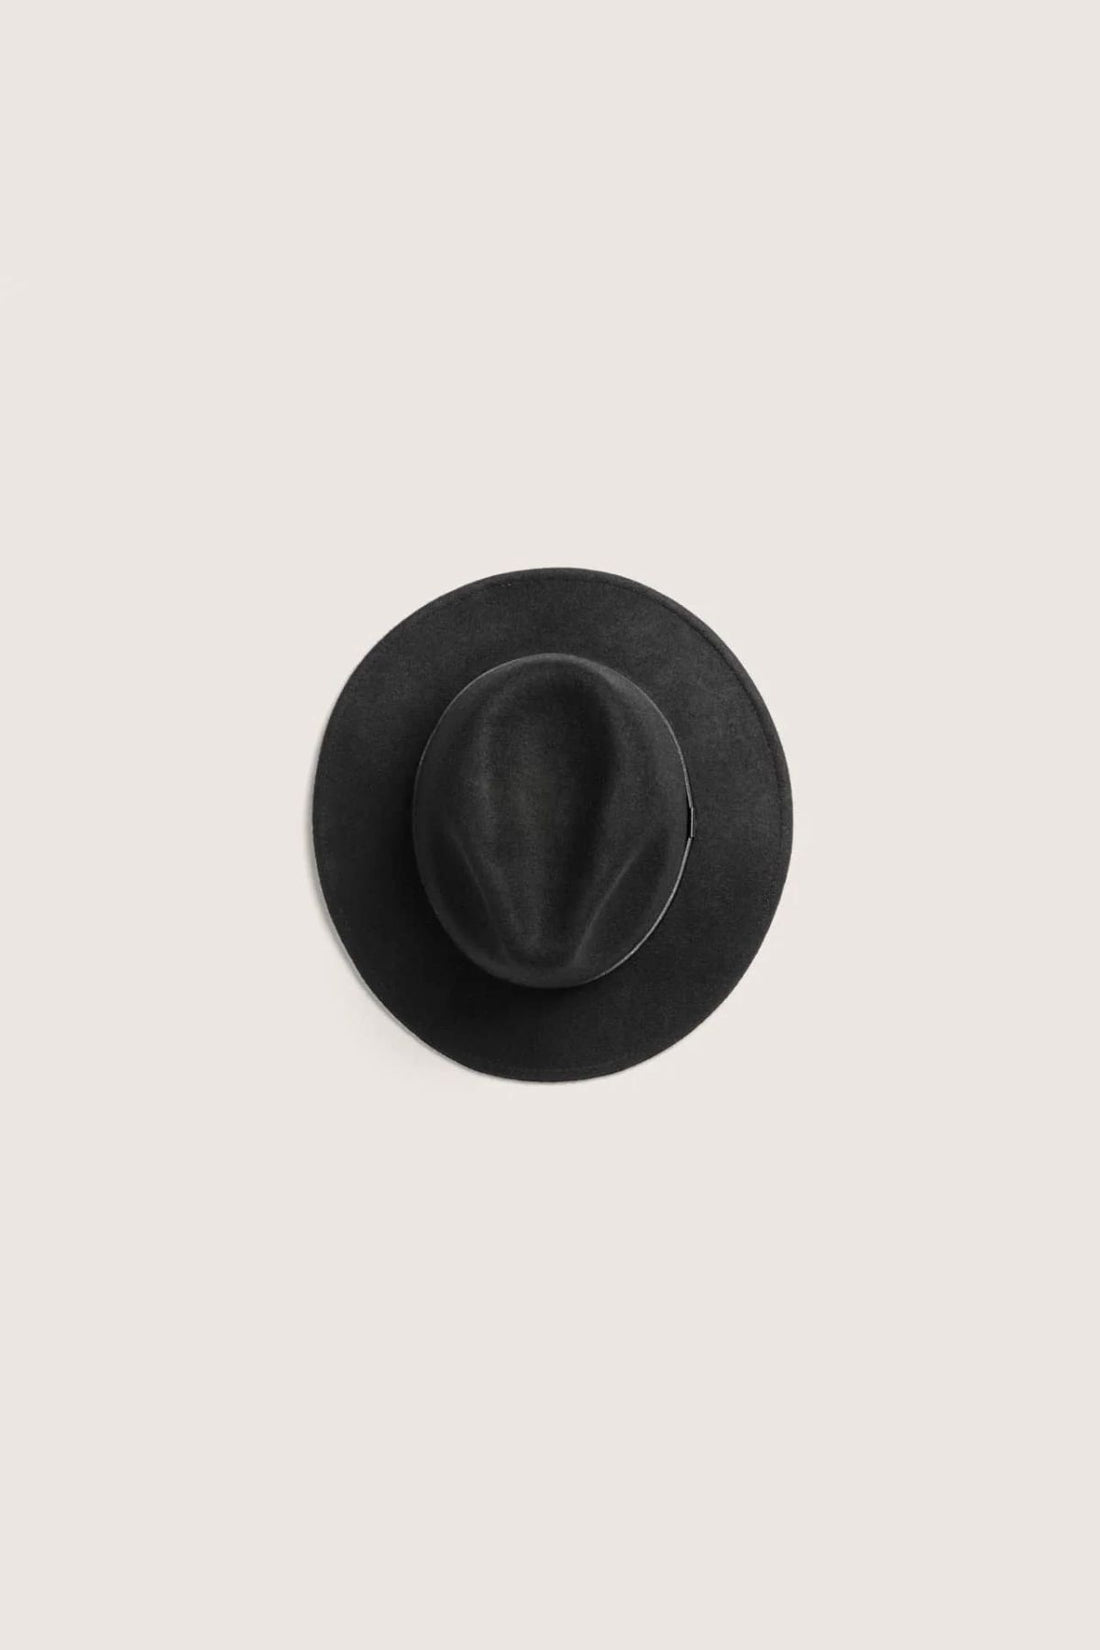 William Wool Hat in Black